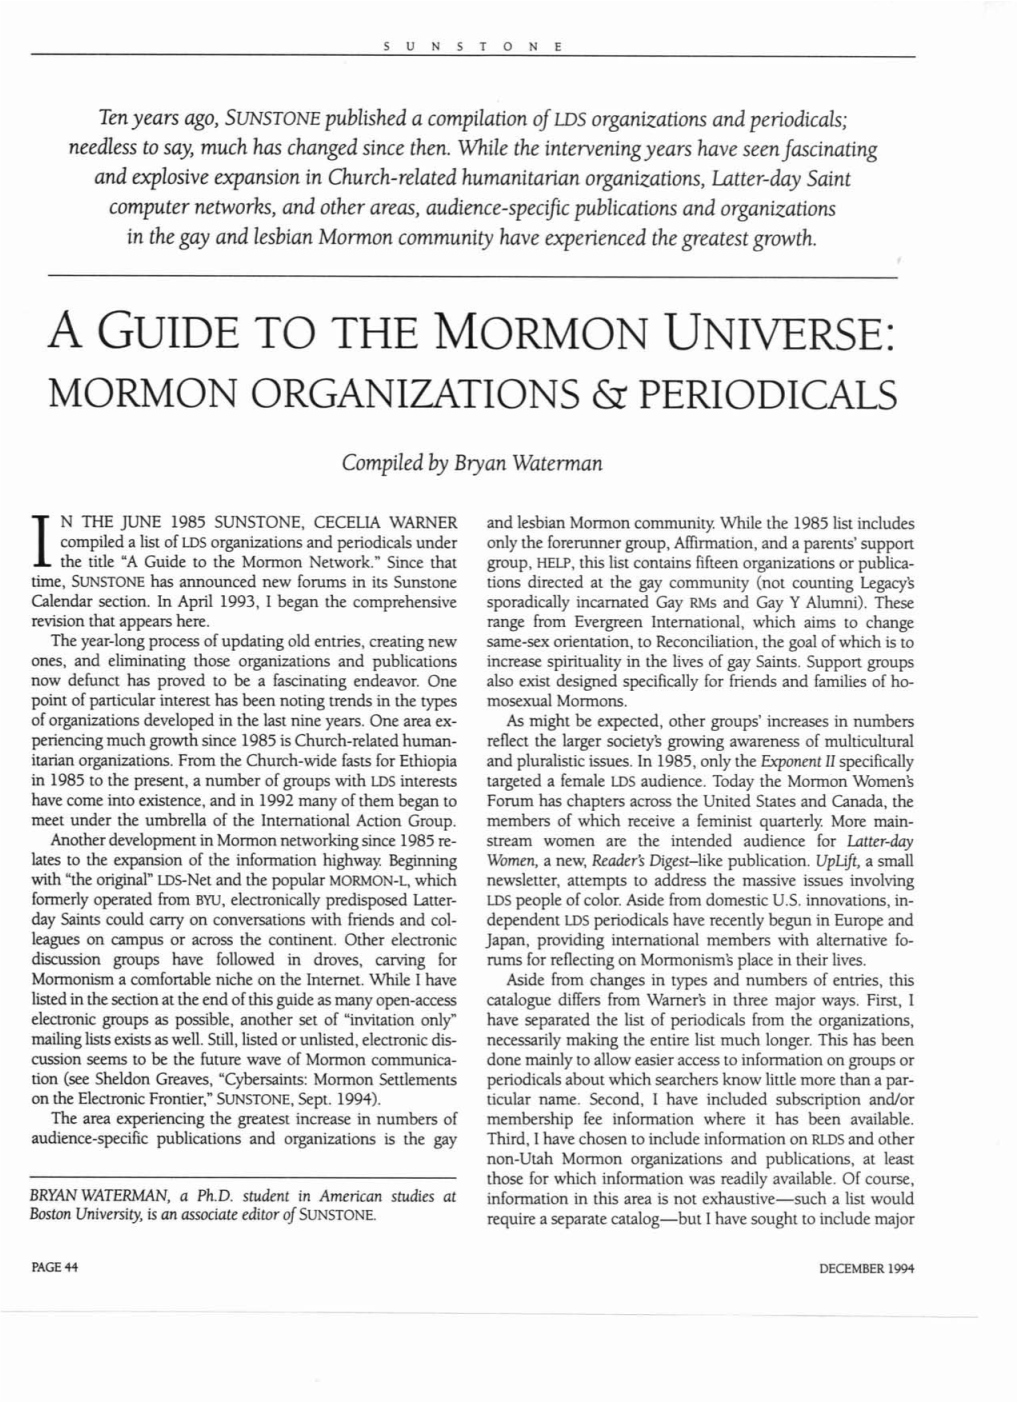 A Guide to the Mormon Universe